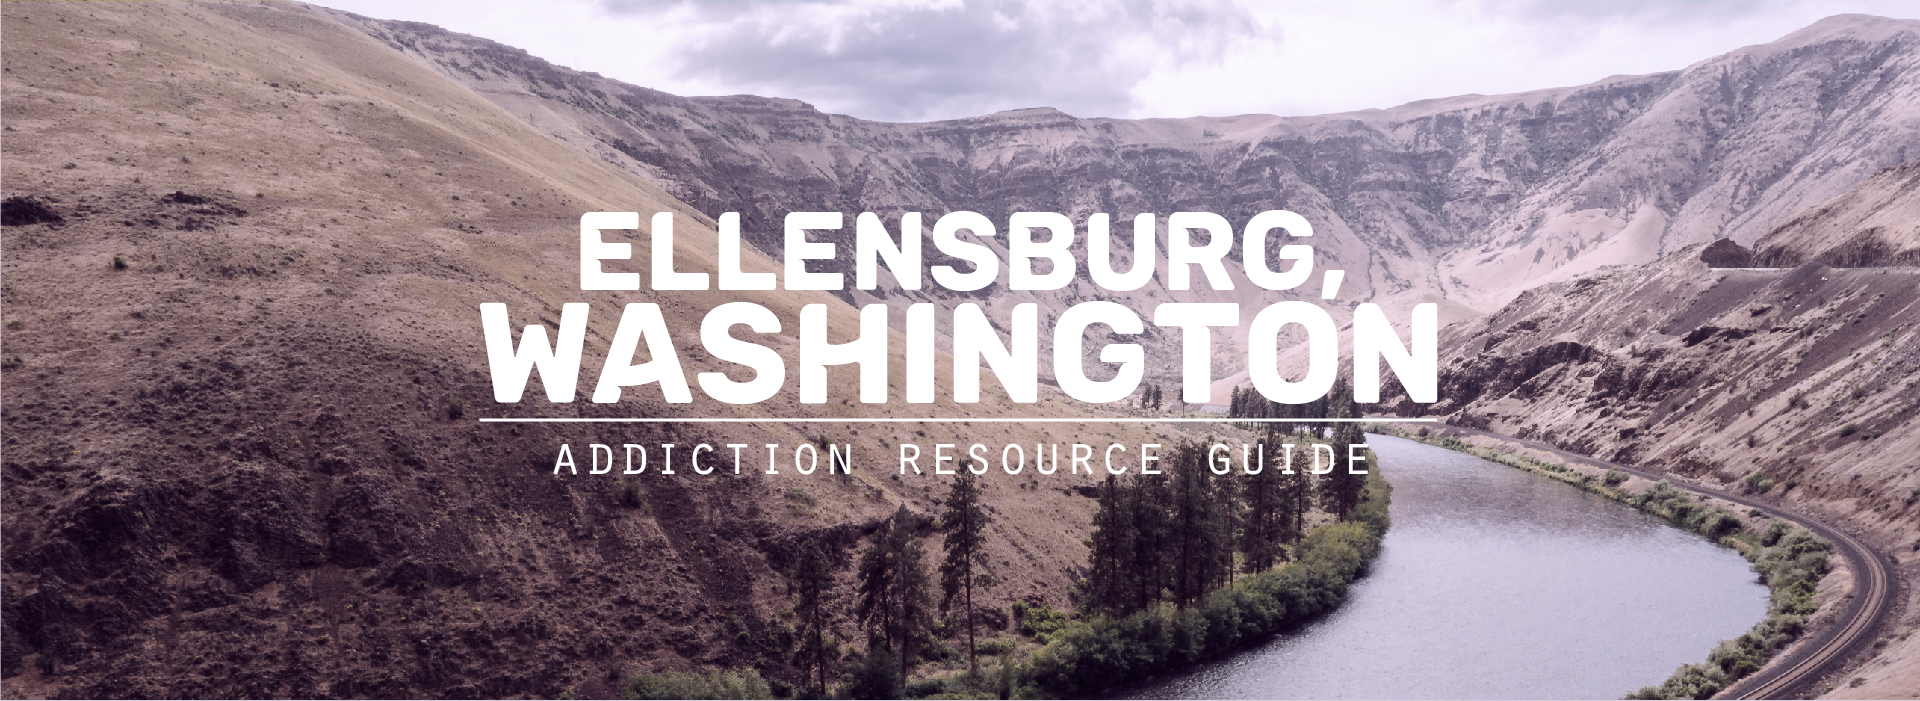 Ellensburg, Washington addiction resources